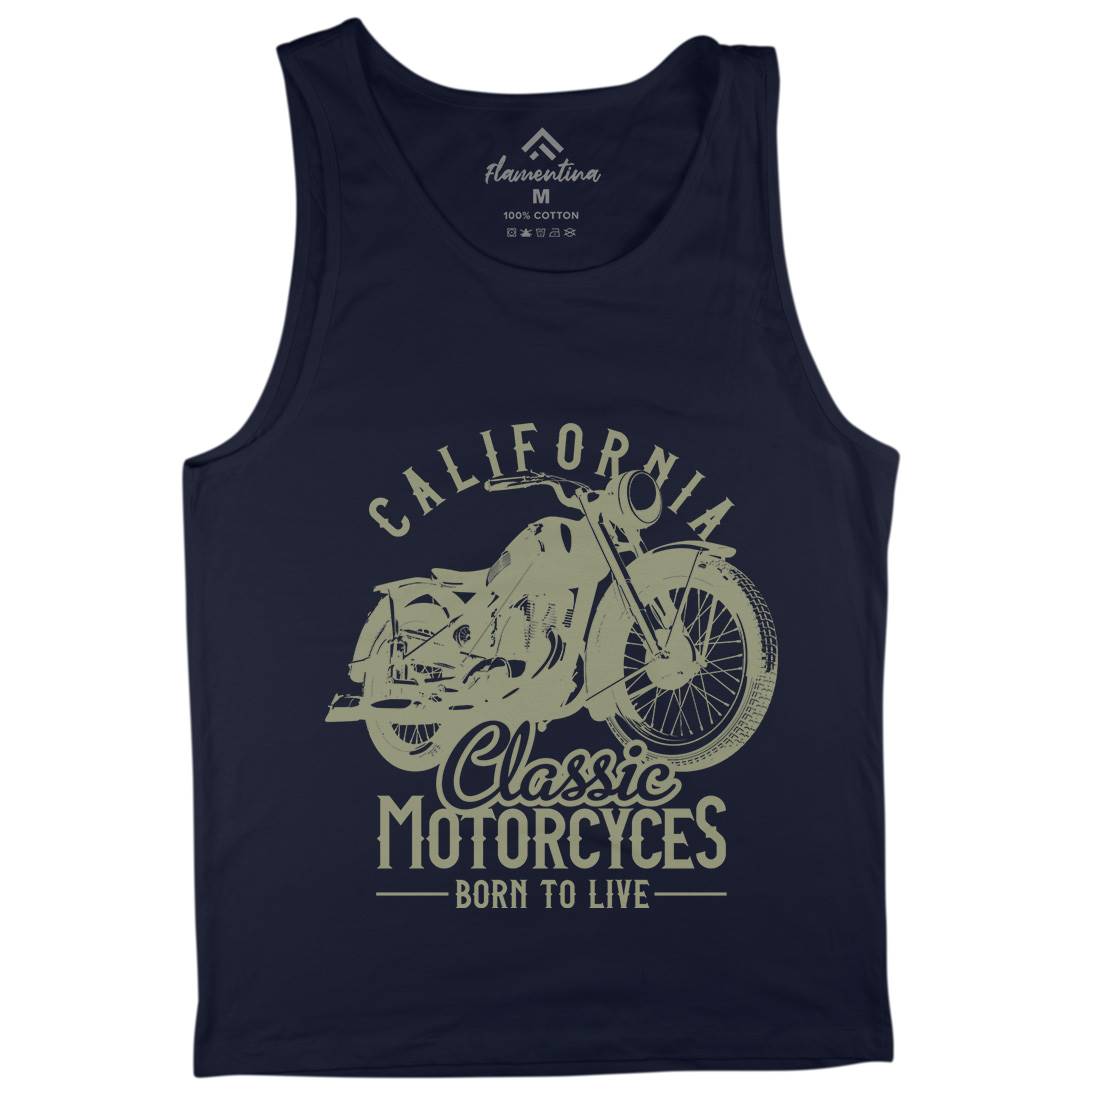 California Mens Tank Top Vest Motorcycles B316